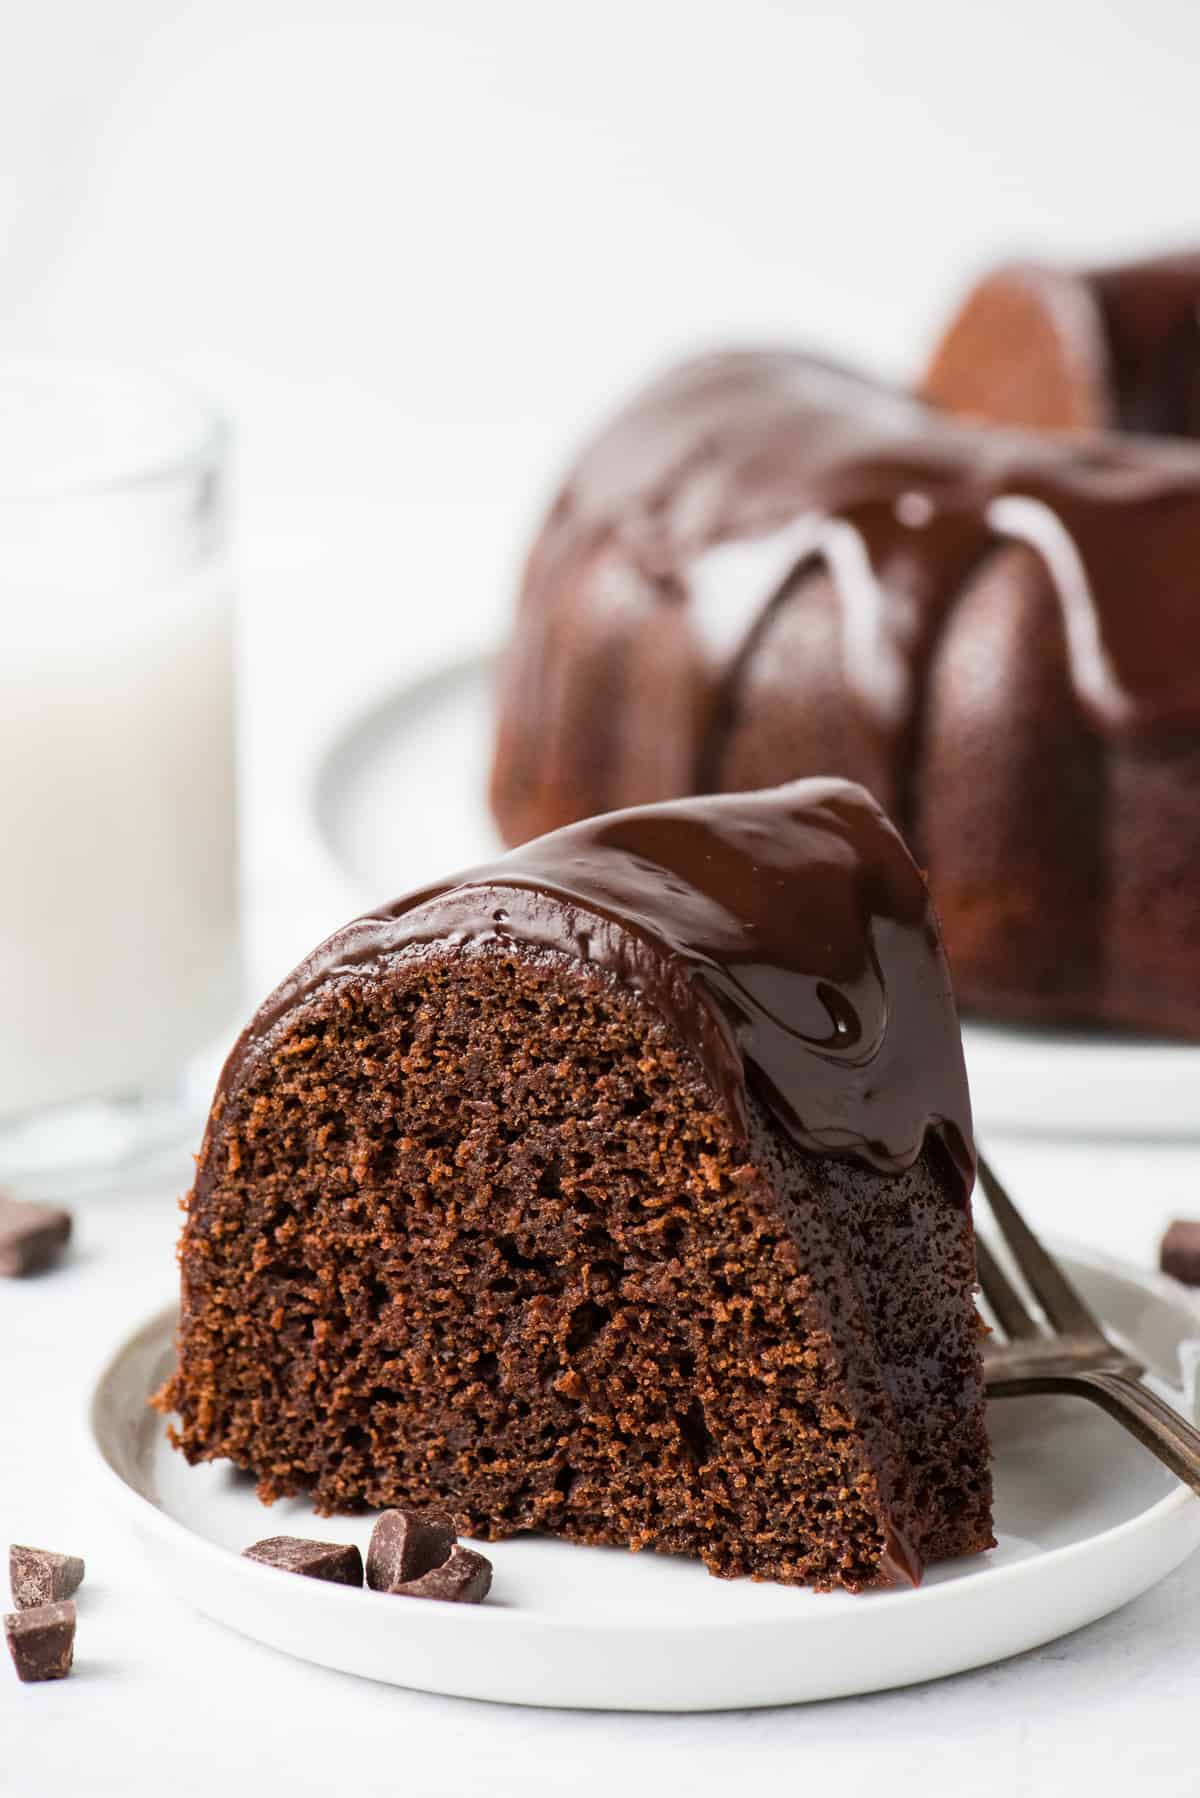 slice of chocolate bundt cake with chocolate glaze on white plate on white background